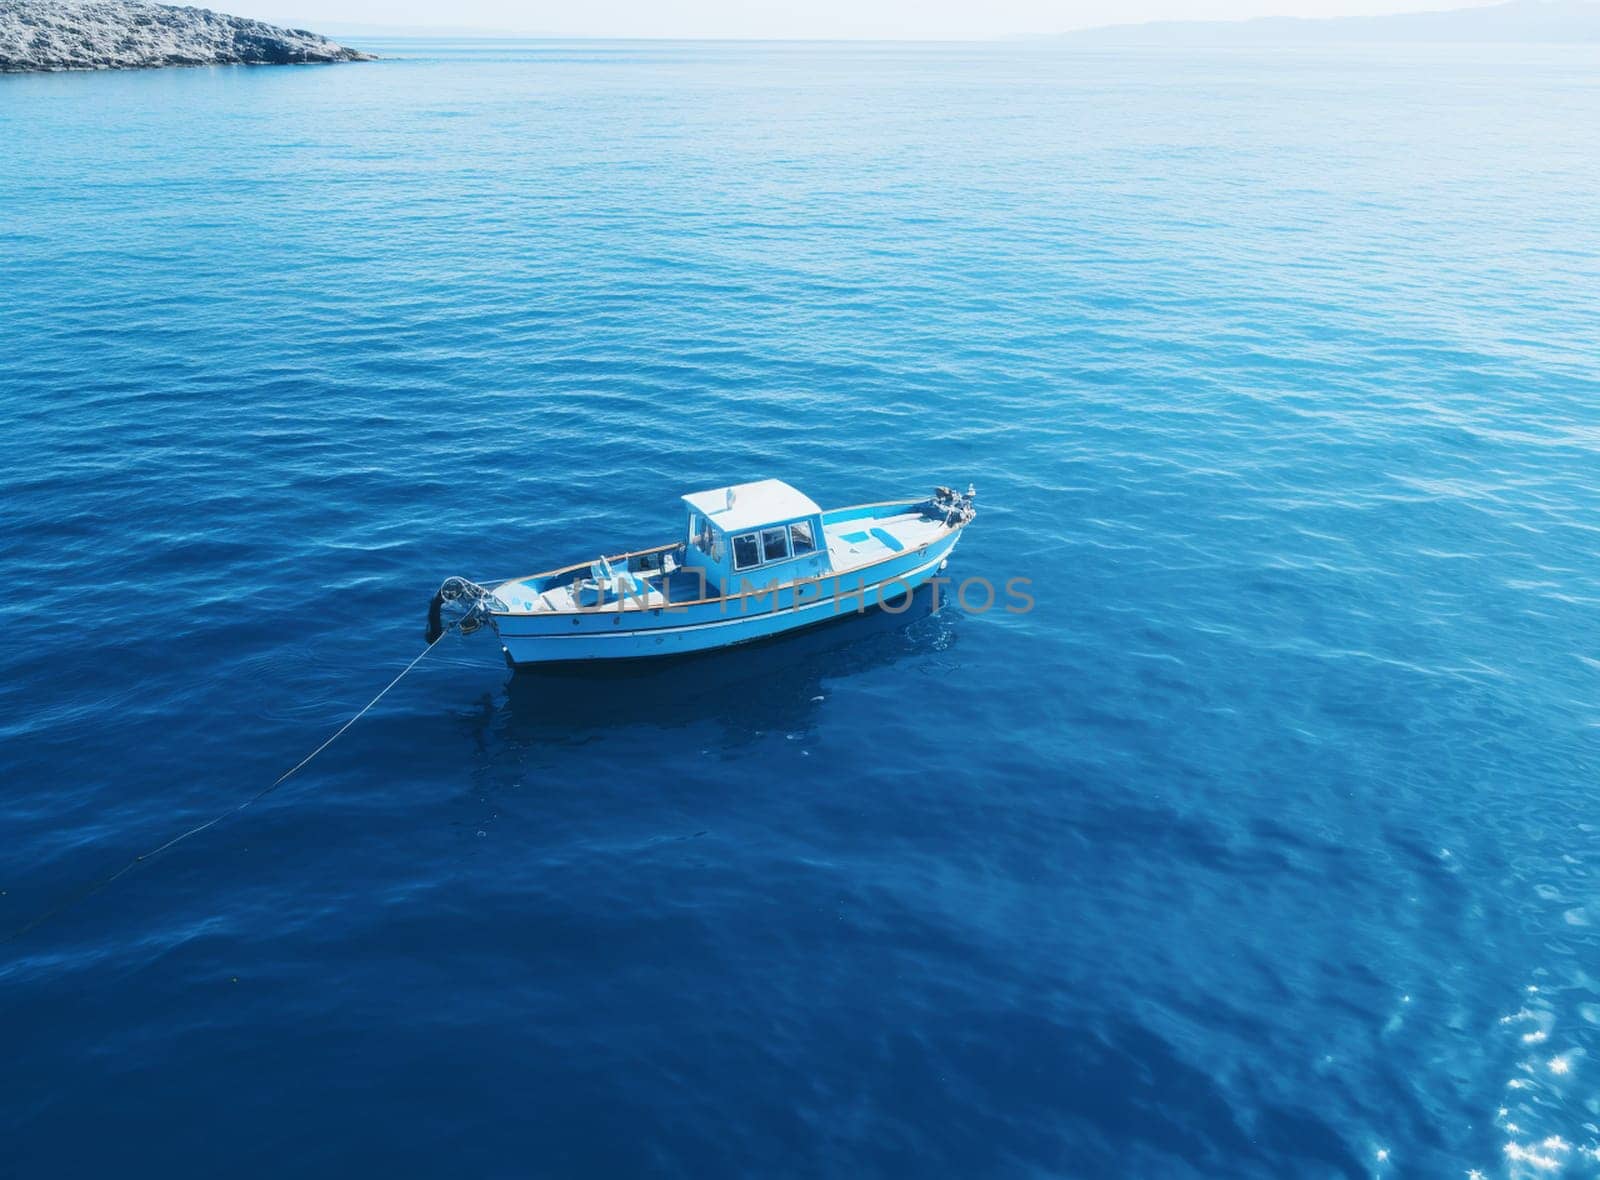 Aerial drone photo of small luxury yacht cruising in deep blue sea near Aegean island, Greece by Andelov13